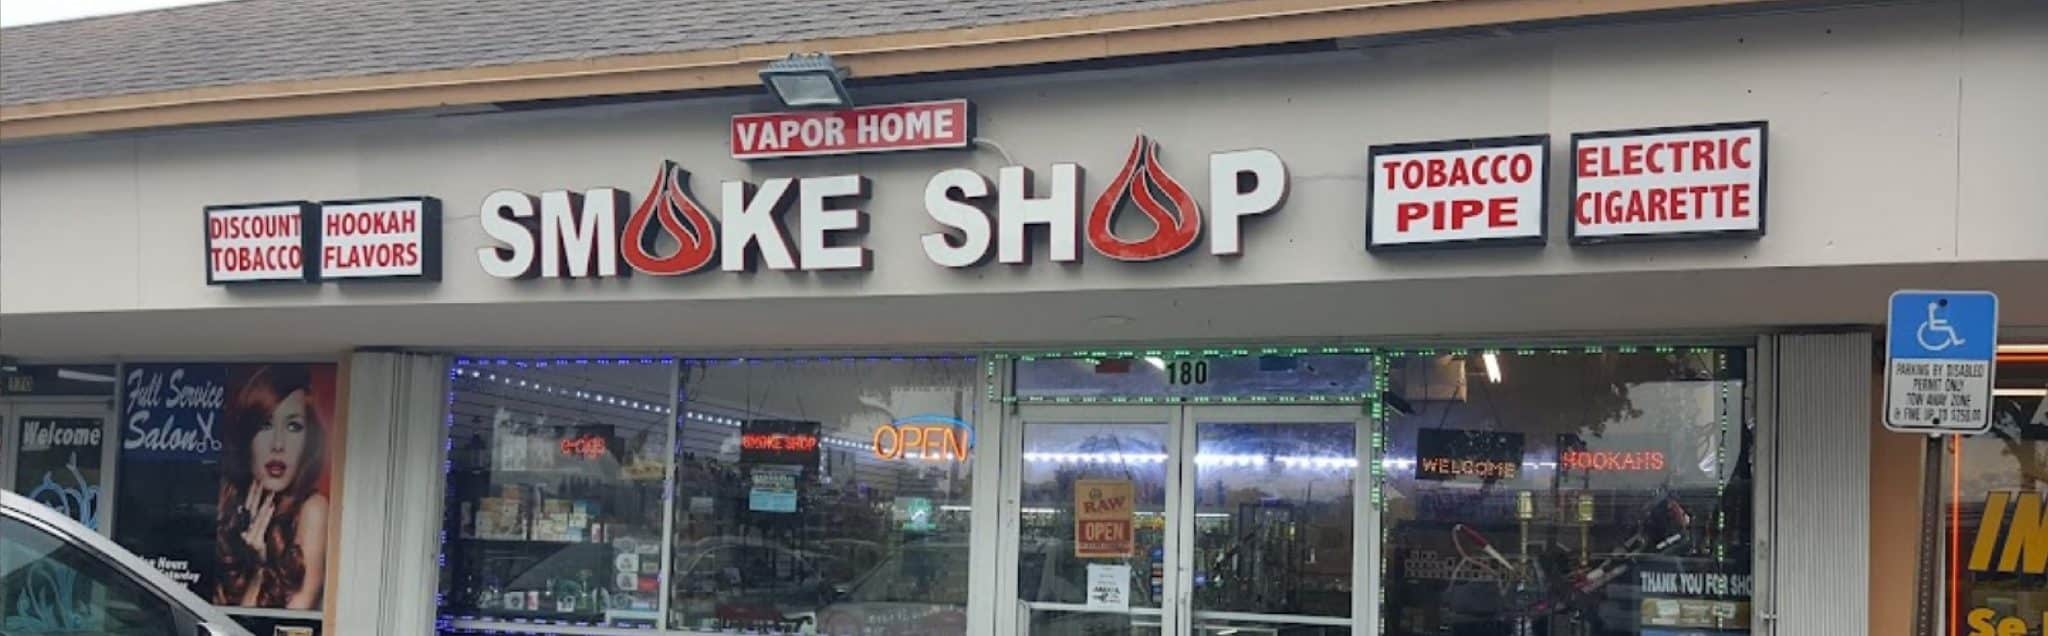 image of vapor home smoke shop in homestead fl